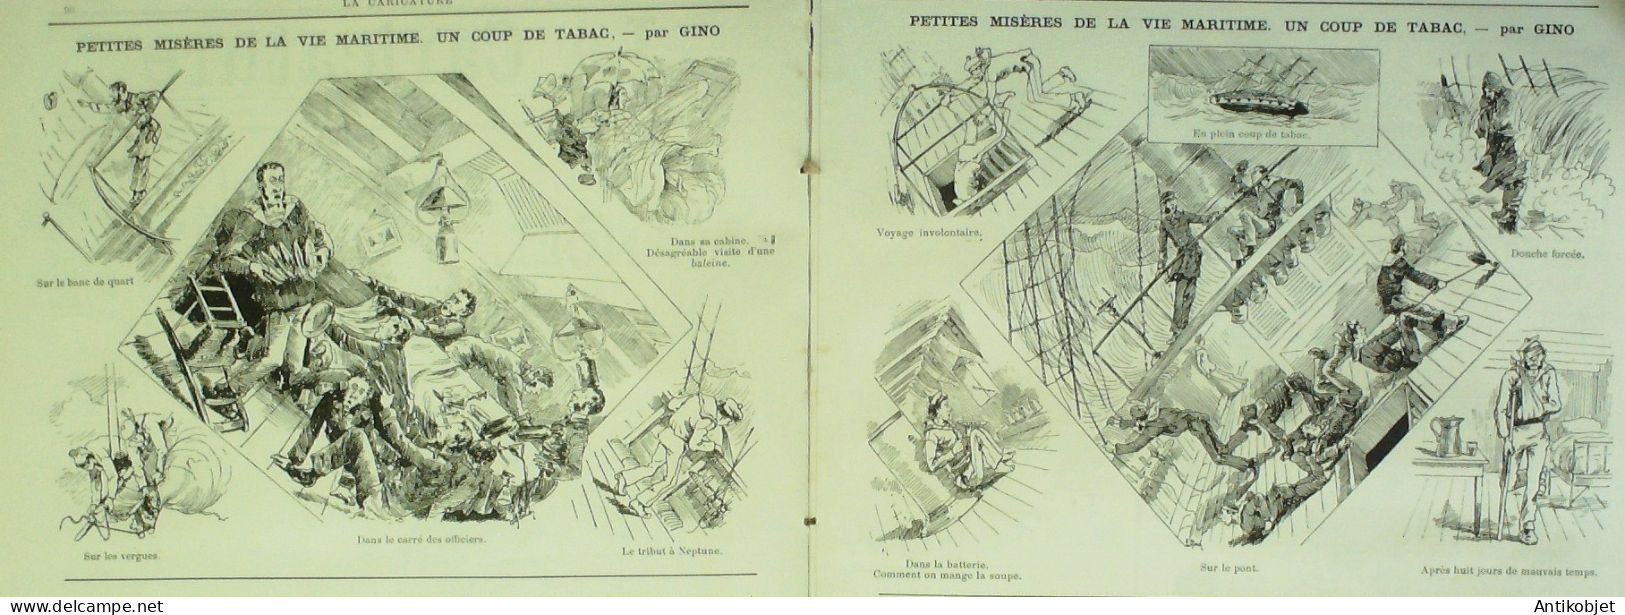 La Caricature 1883 N°169 Manuel Parfait Homme Politique Robida Coup De Tabac Gino Caran D'Ache - Tijdschriften - Voor 1900